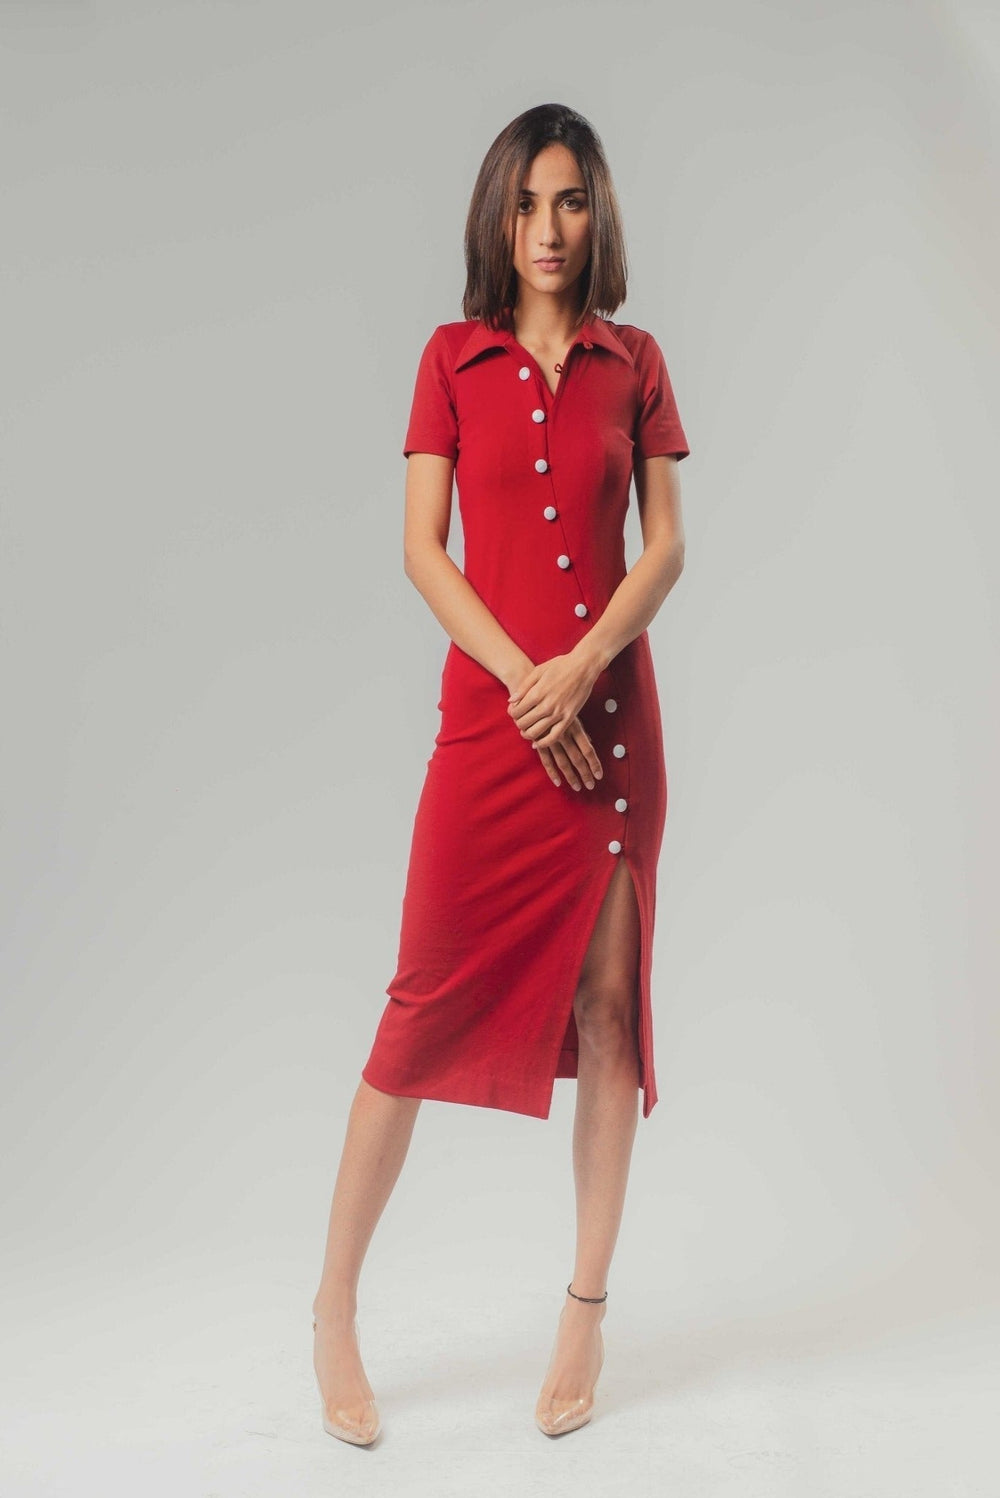 Short sleeve scarlet red dress with slit